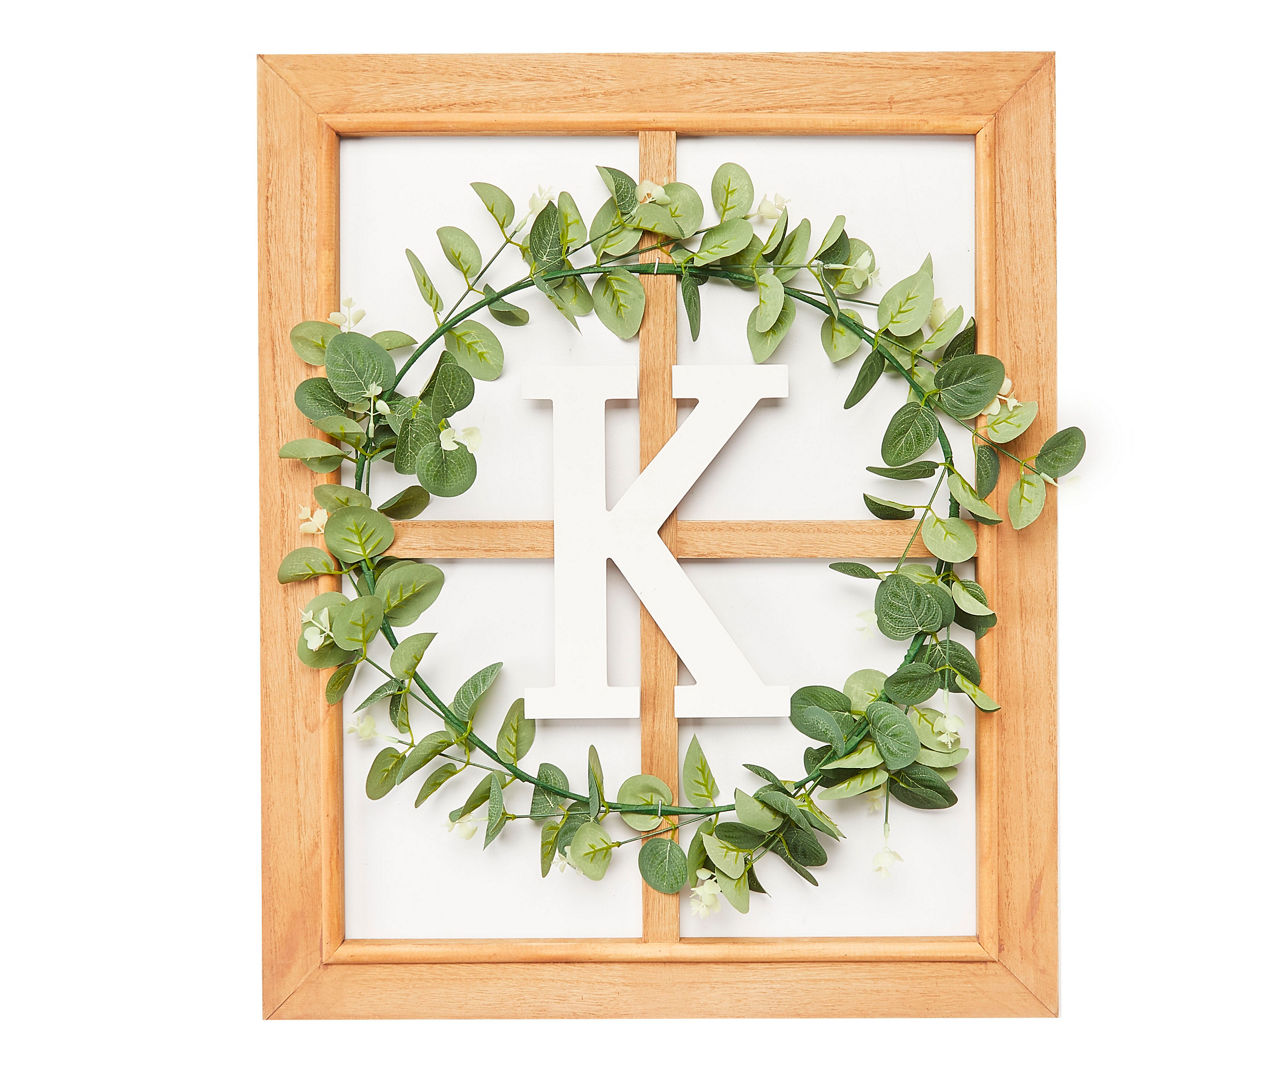 "K" Monogram Framed Windowpane Plaque with Greenery Wreath